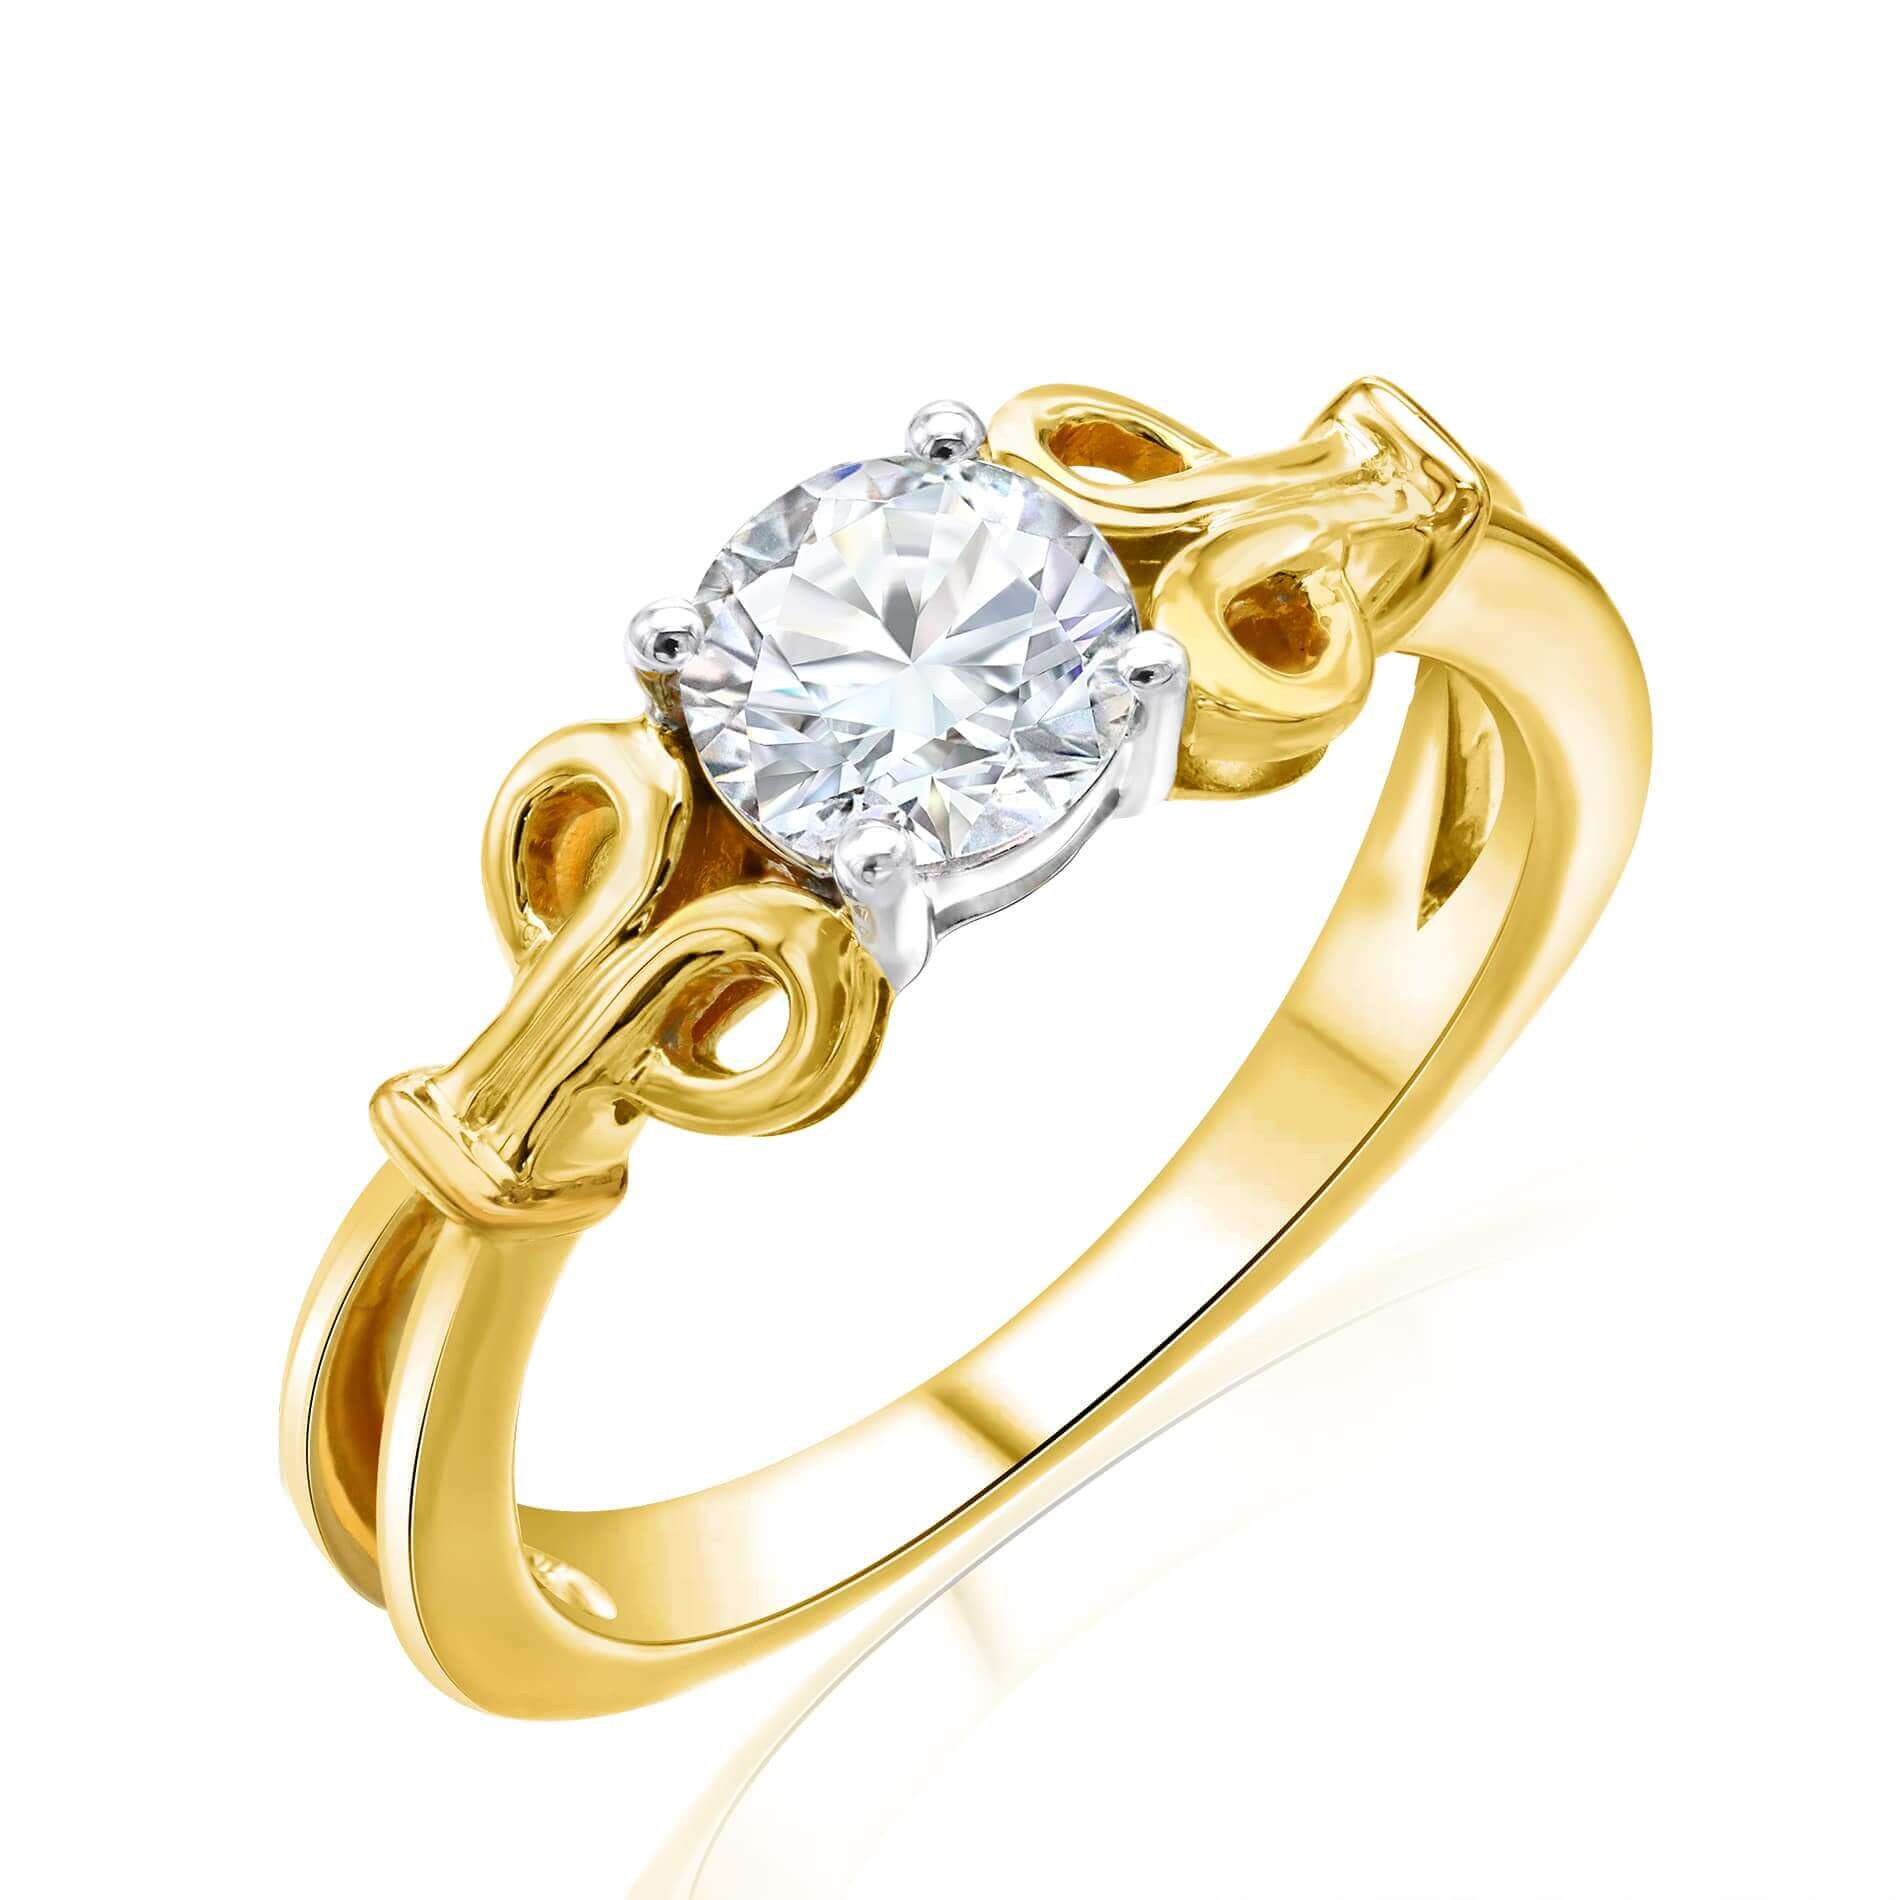 Share 183+ ladies diamond ring super hot